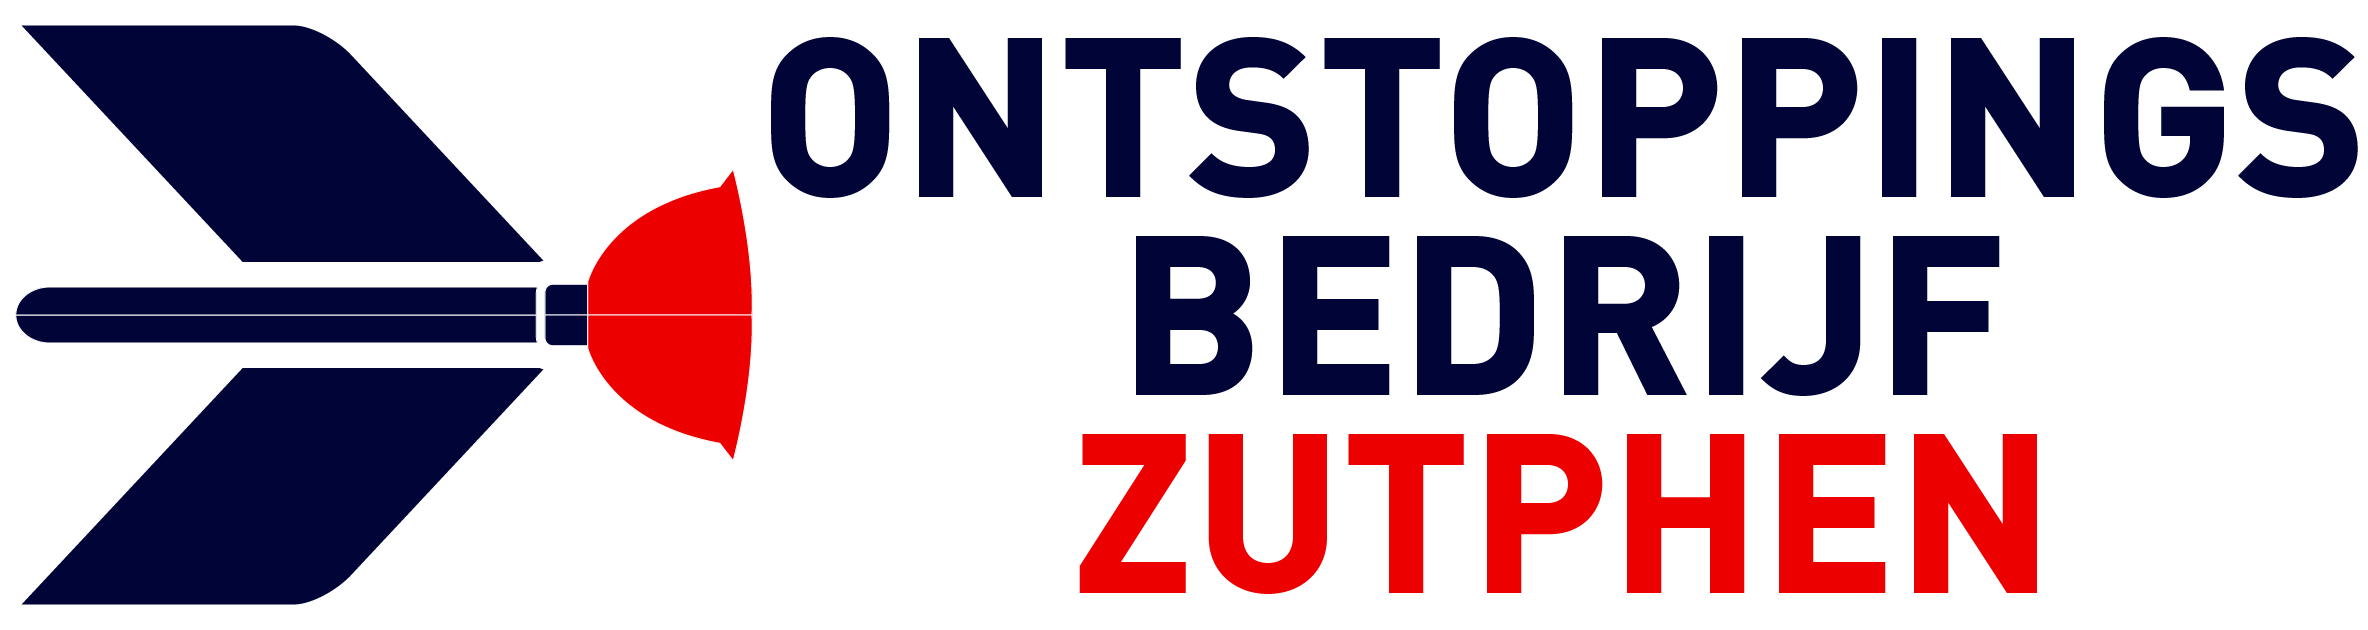 Ontstoppingsbedrijf Zutphen logo